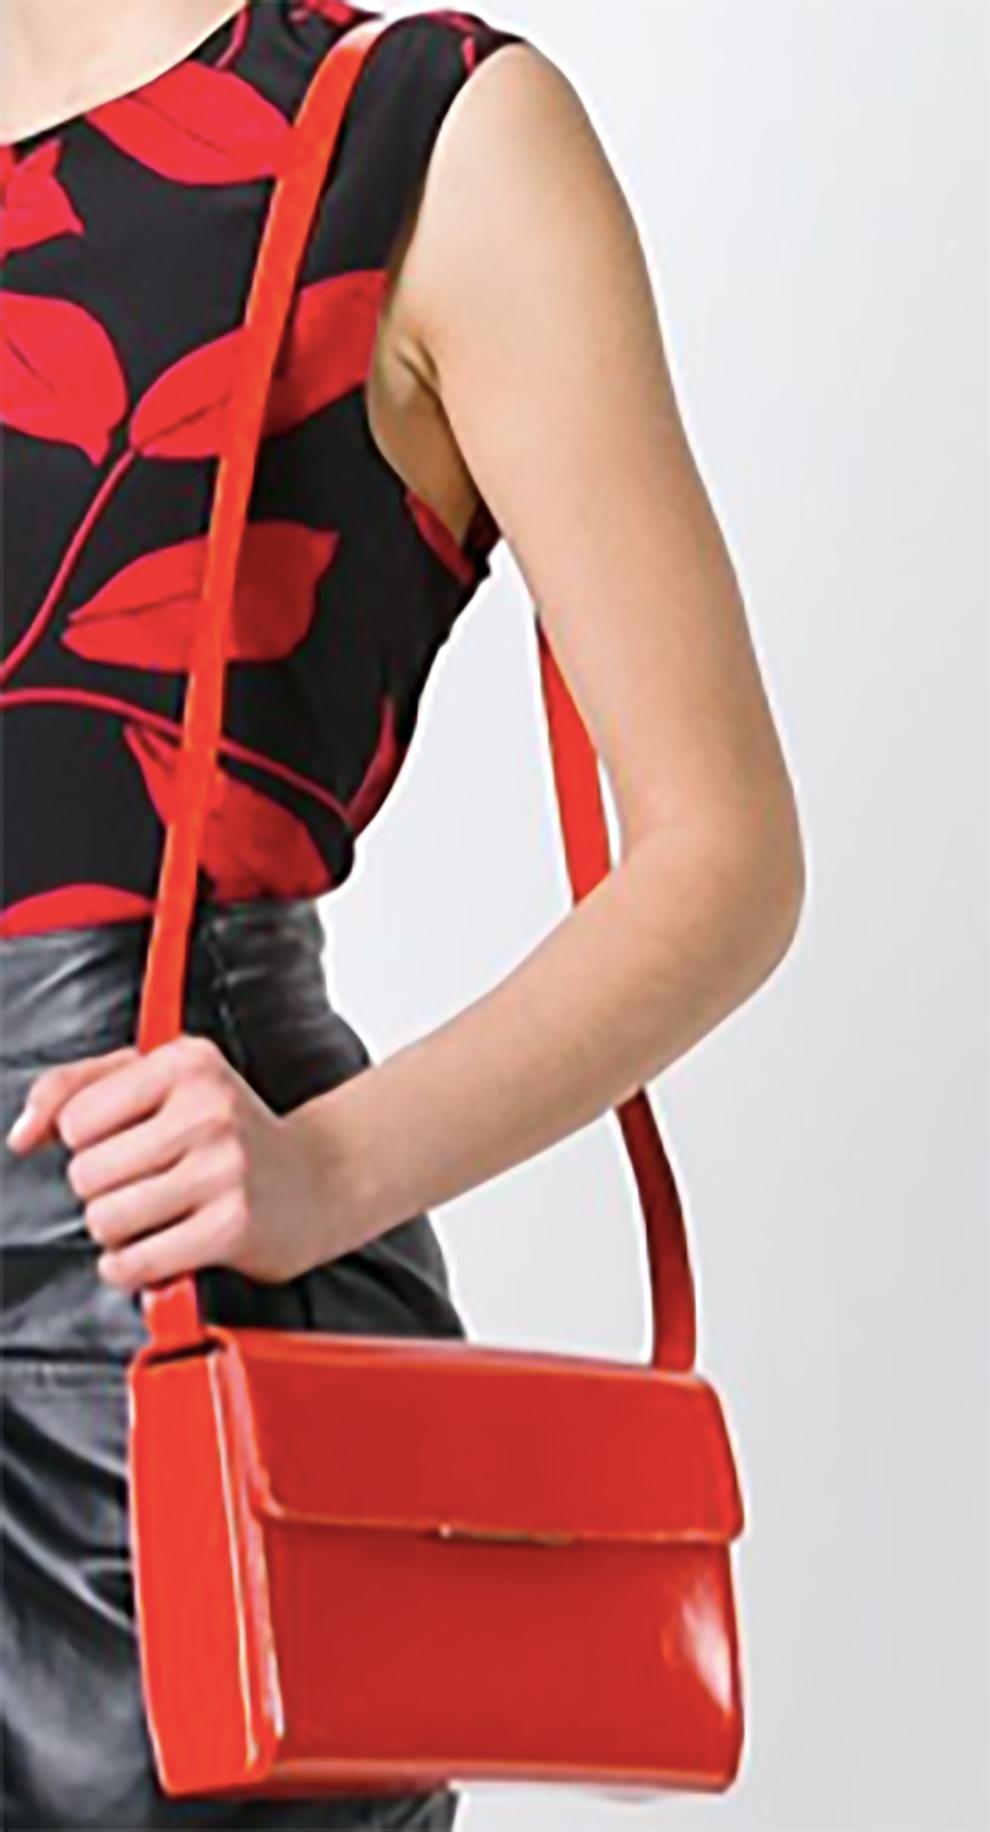 Women's 1990s Yves Saint Laurent Red Patent Leather Shoulder Bag